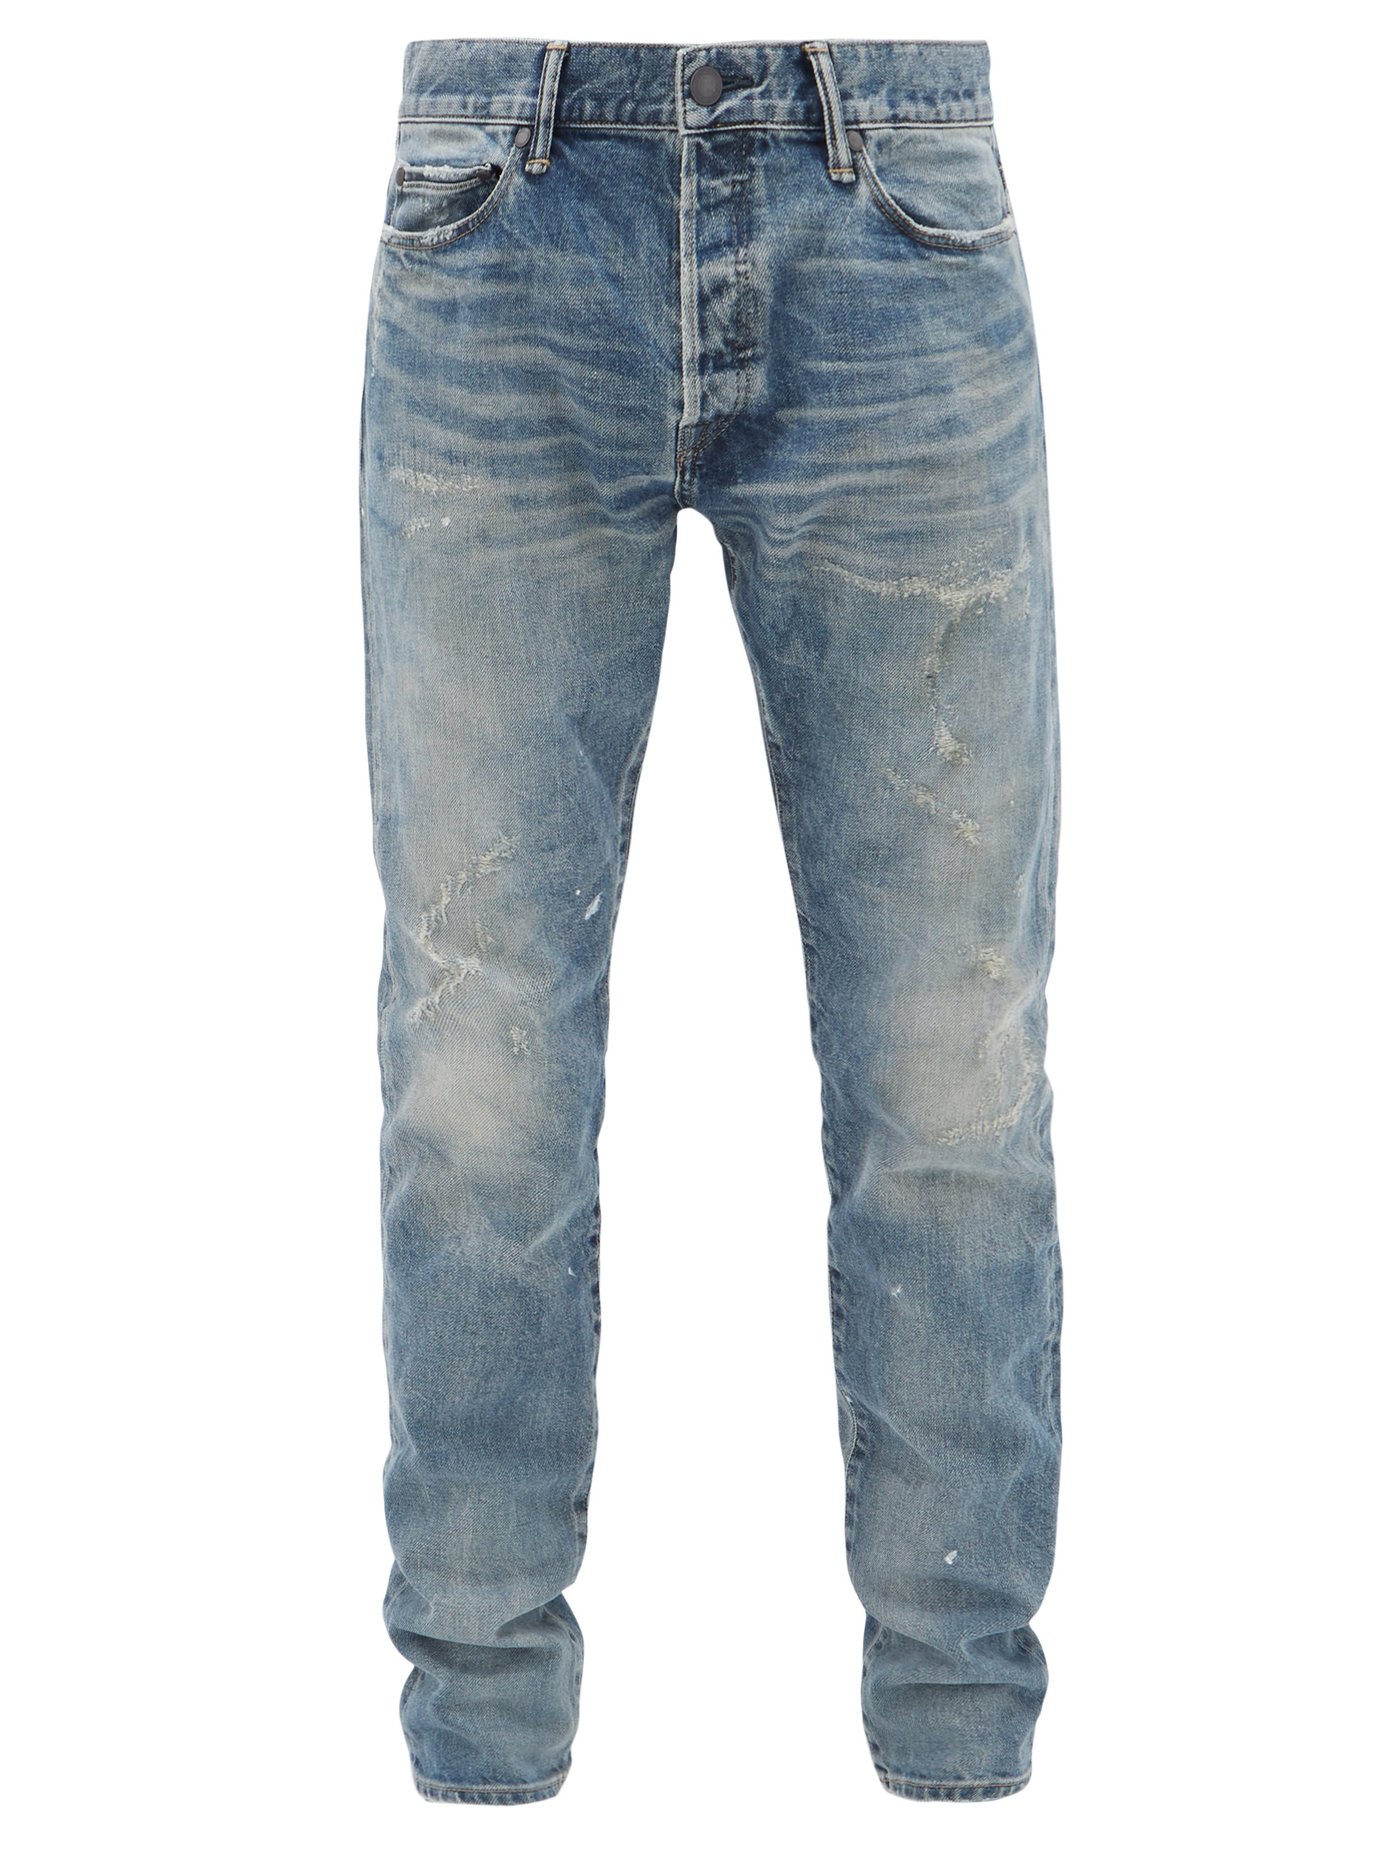 carhartt b460 jeans